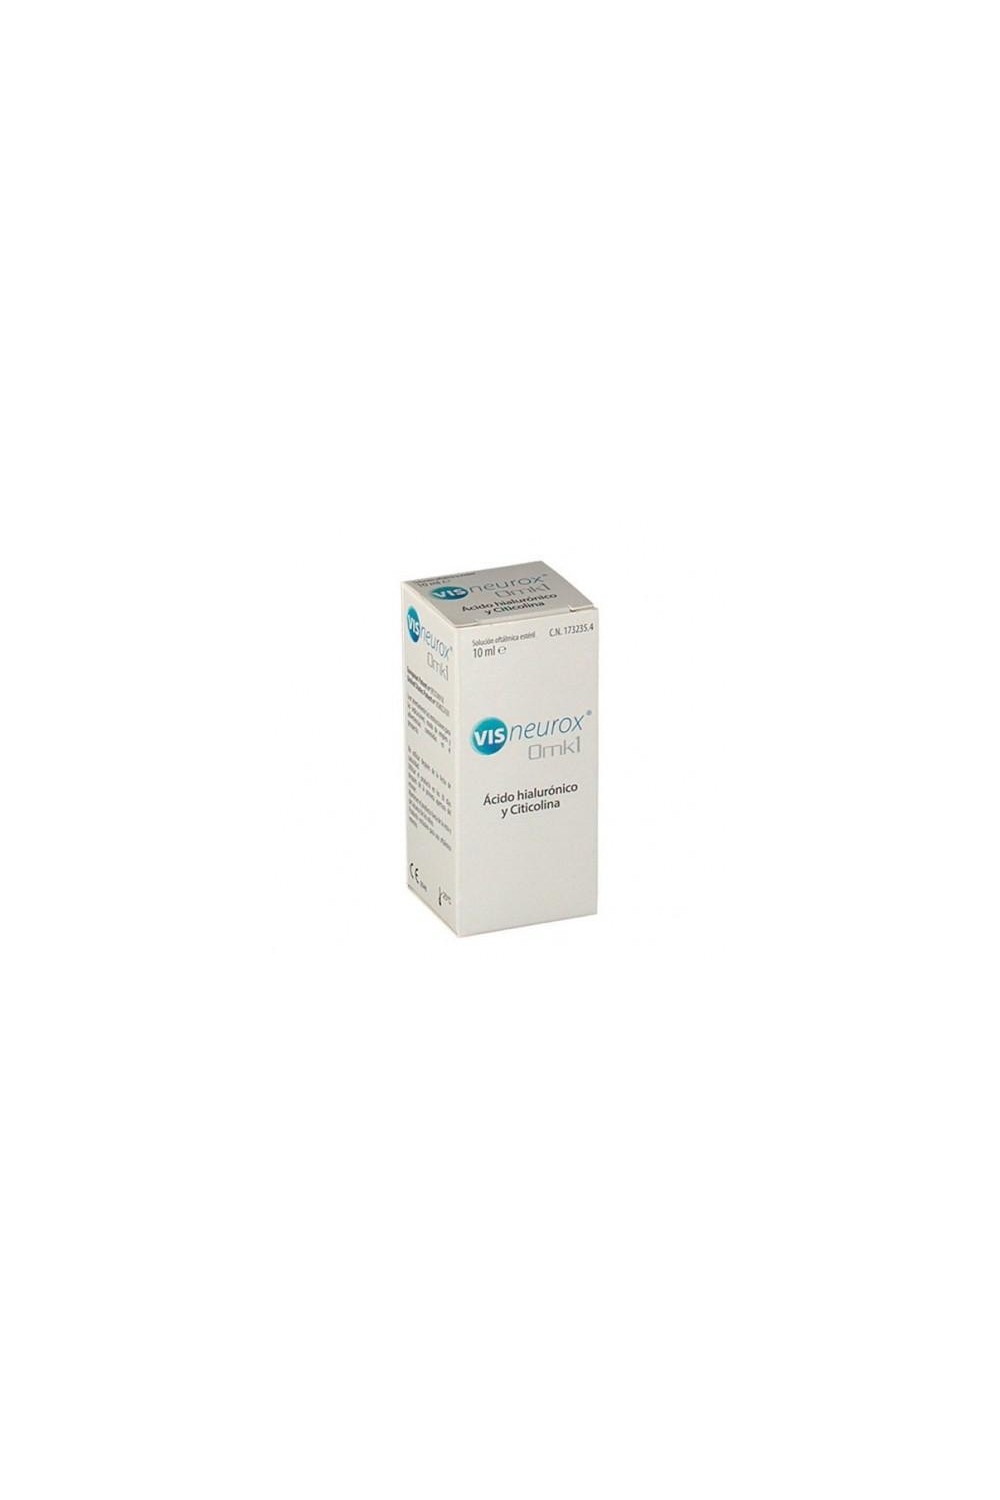 Pharmadiet Visneurox Omk1 Solución 10ml